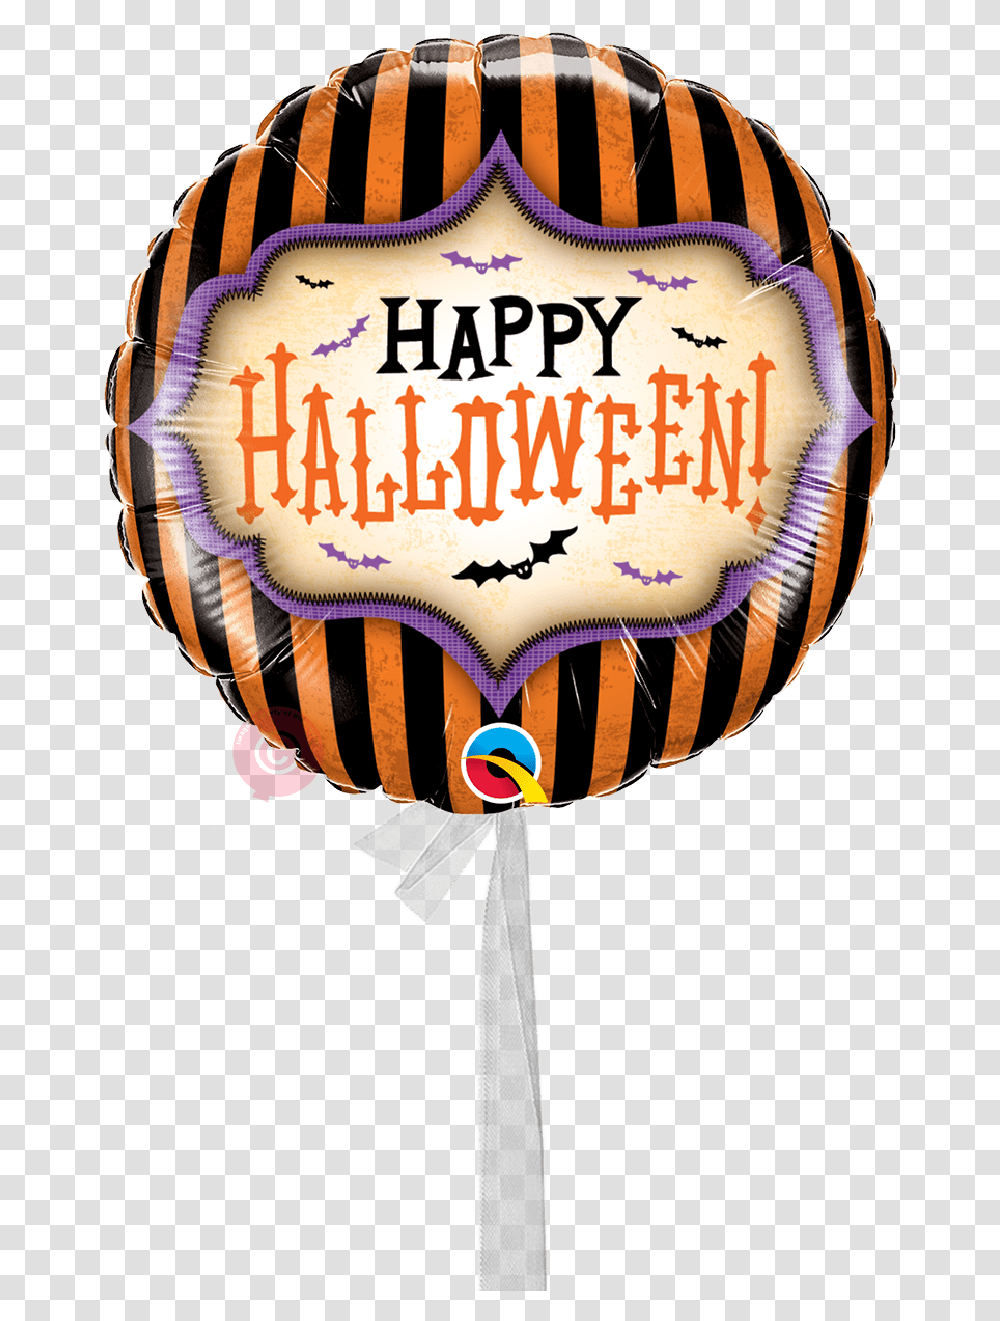 Happy Halloween Spooky Bats Single Balloons Halloween Balloons Qualatex 2018 Foil, Food, Cross, Birthday Cake Transparent Png